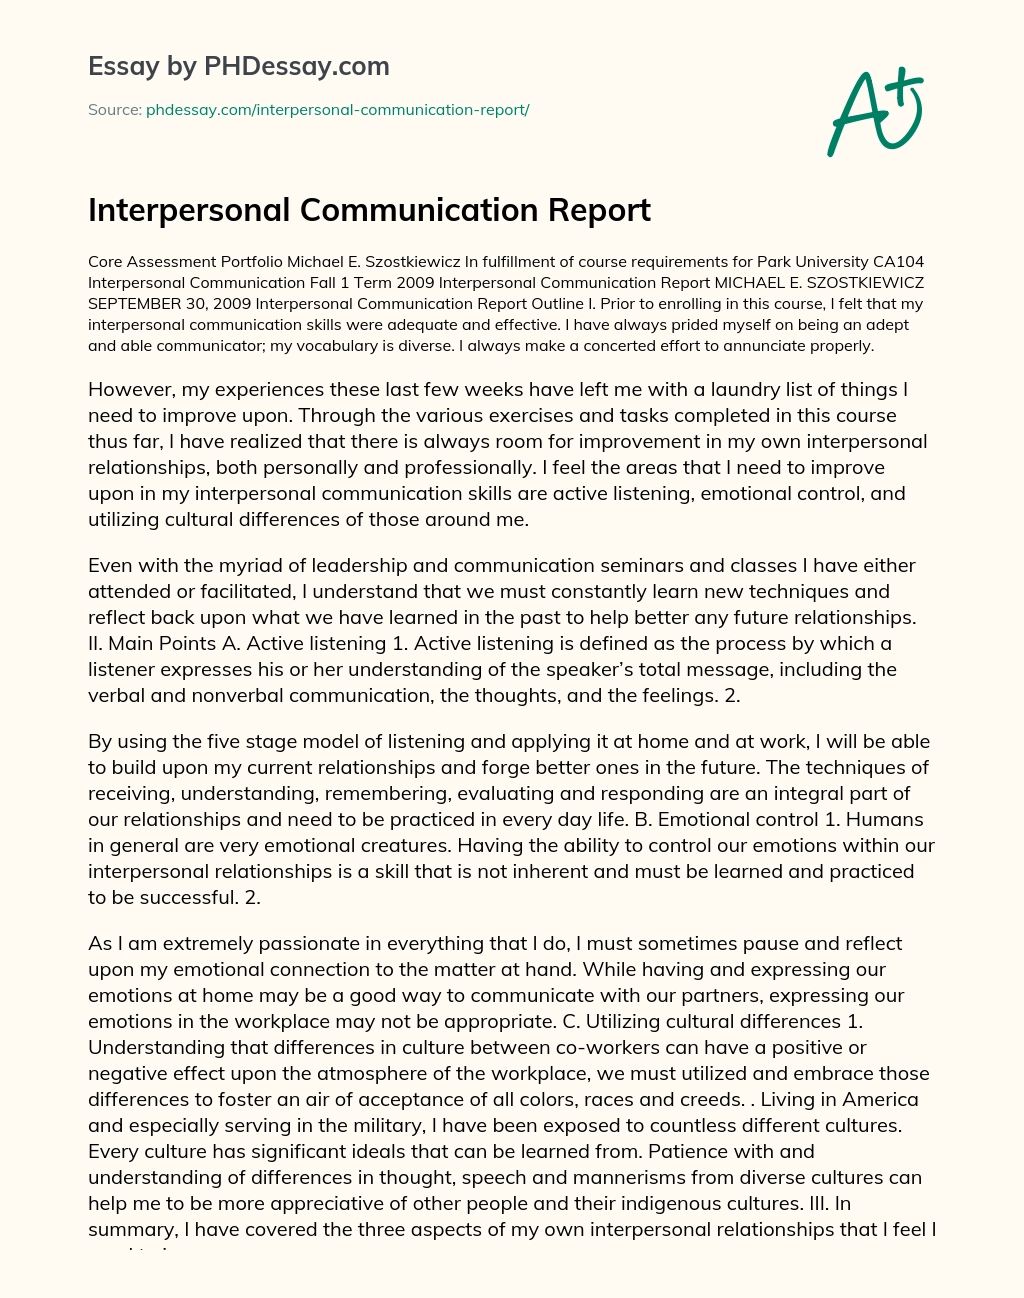 Interpersonal Communication Report essay